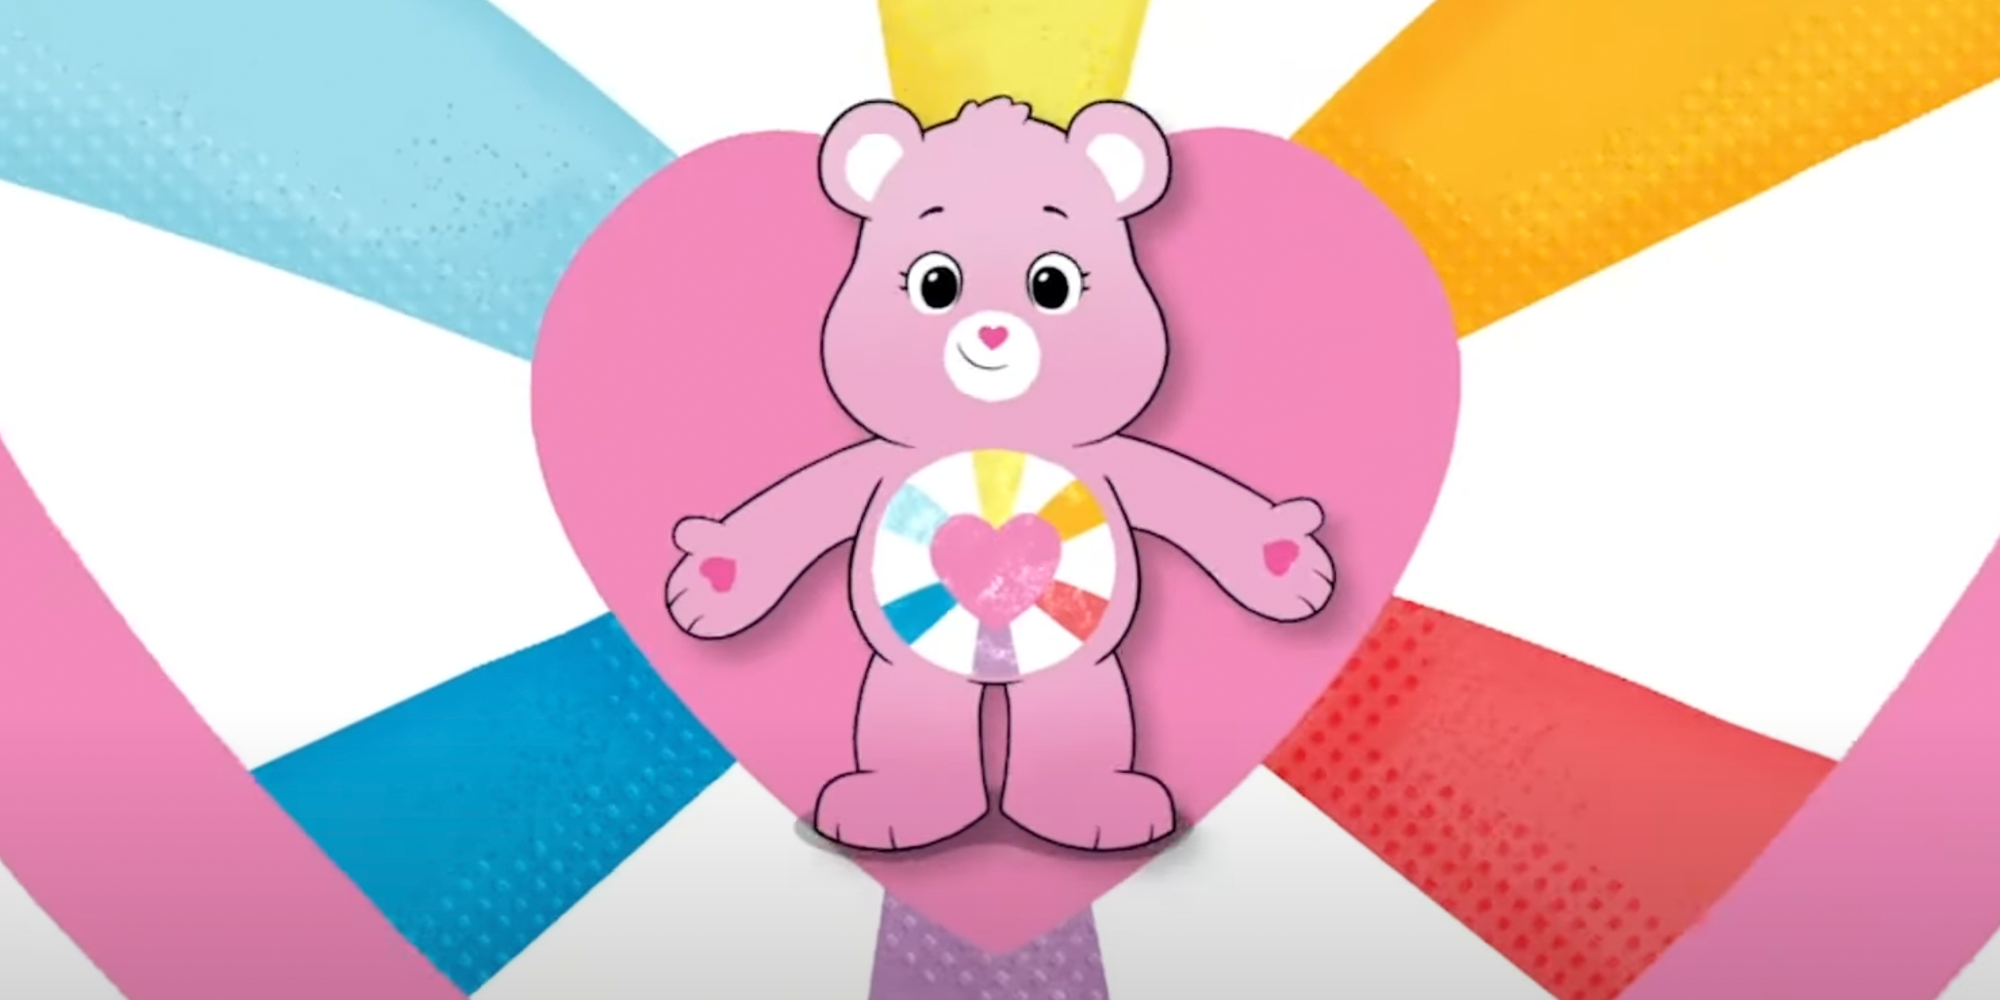 Hopeful Heart Bear from the Care Bears